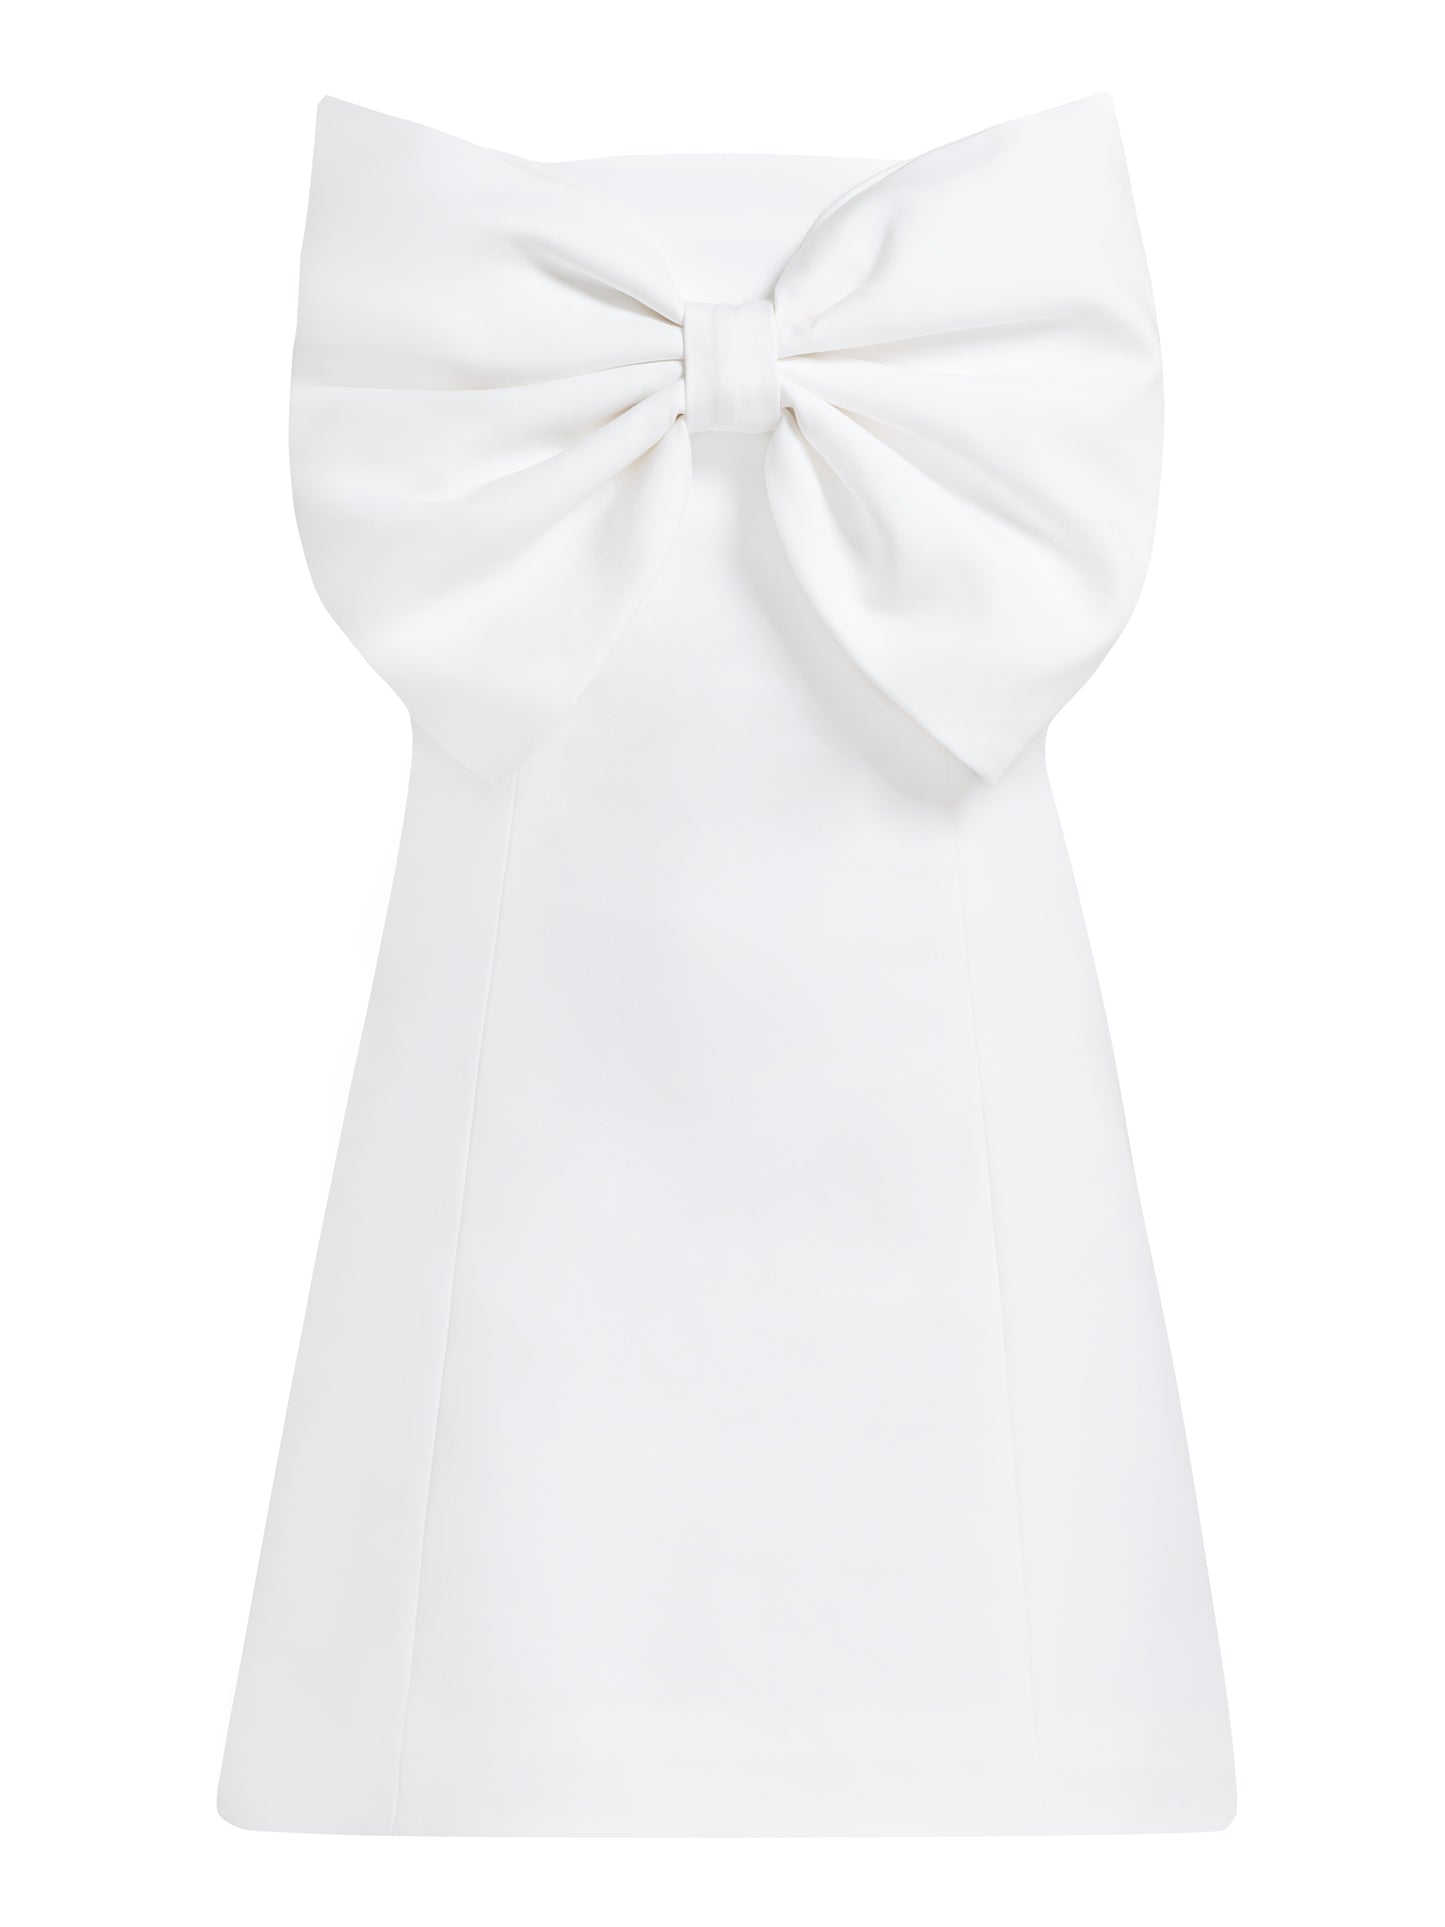 Love Affair Statement Bow Mini Dress - White by Tia Dorraine Women's Luxury Fashion Designer Clothing Brand